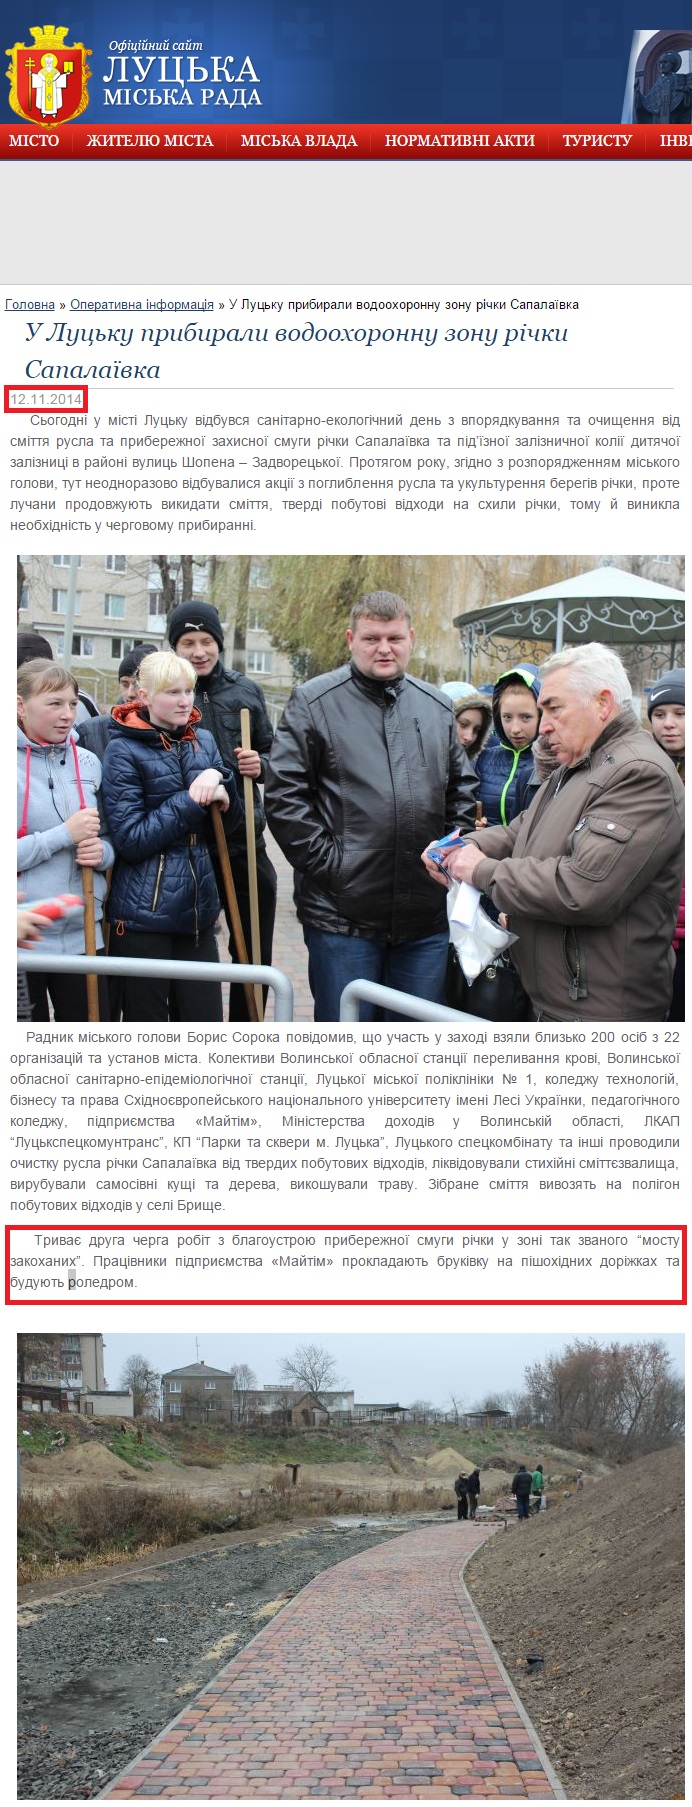 http://www.lutskrada.gov.ua/fast-news/u-lucku-prybyraly-vodoohoronnu-zonu-richky-sapalayivka-0